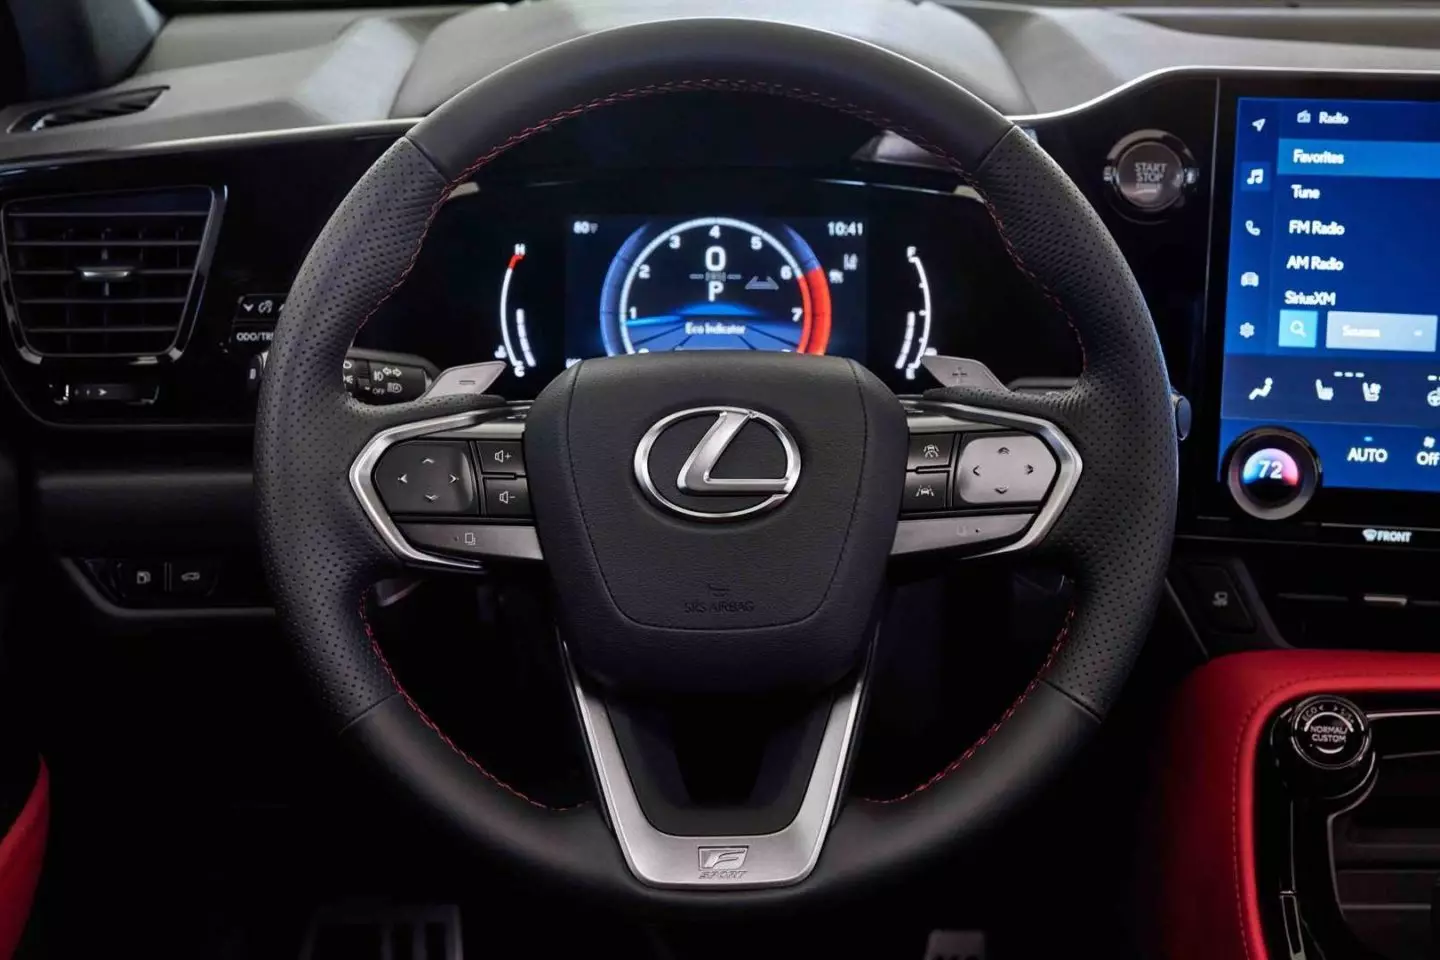 Digital steering wheel and quadrant